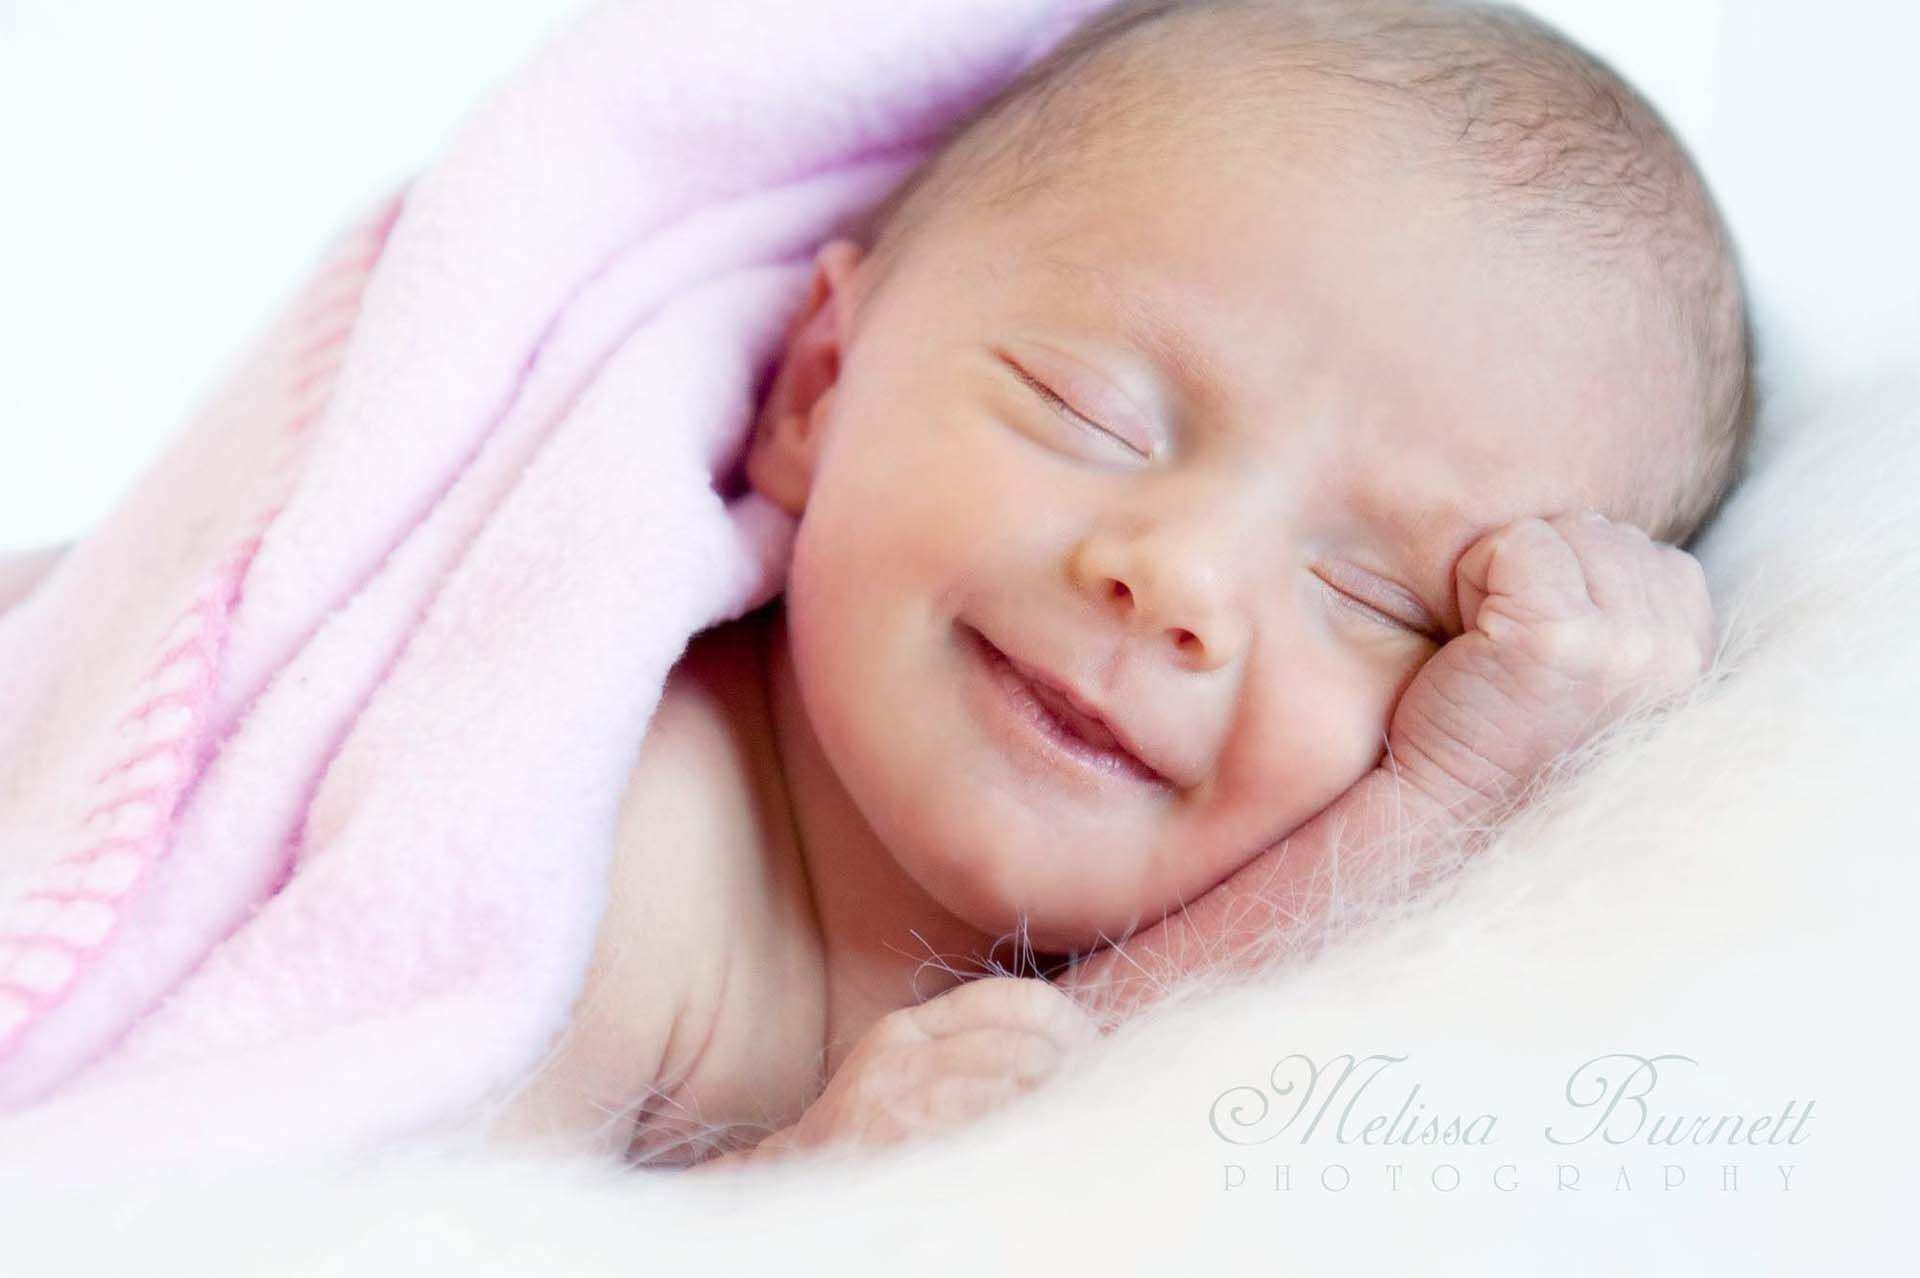 Cute Korean New Born Babies Image High Quality Full HD Baby Pics Of